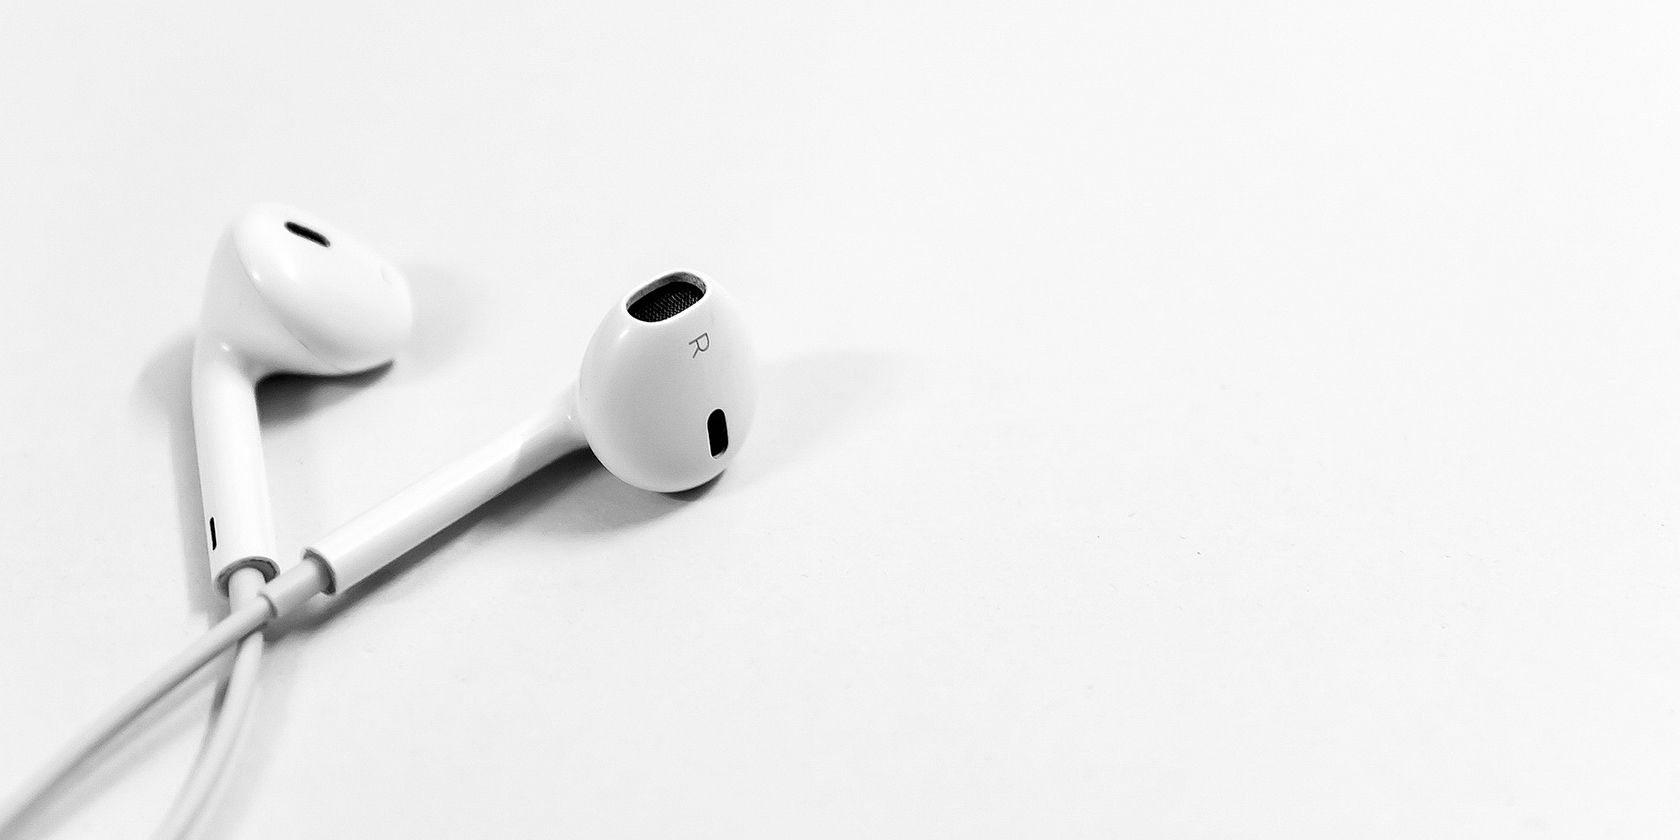 Apple headphones